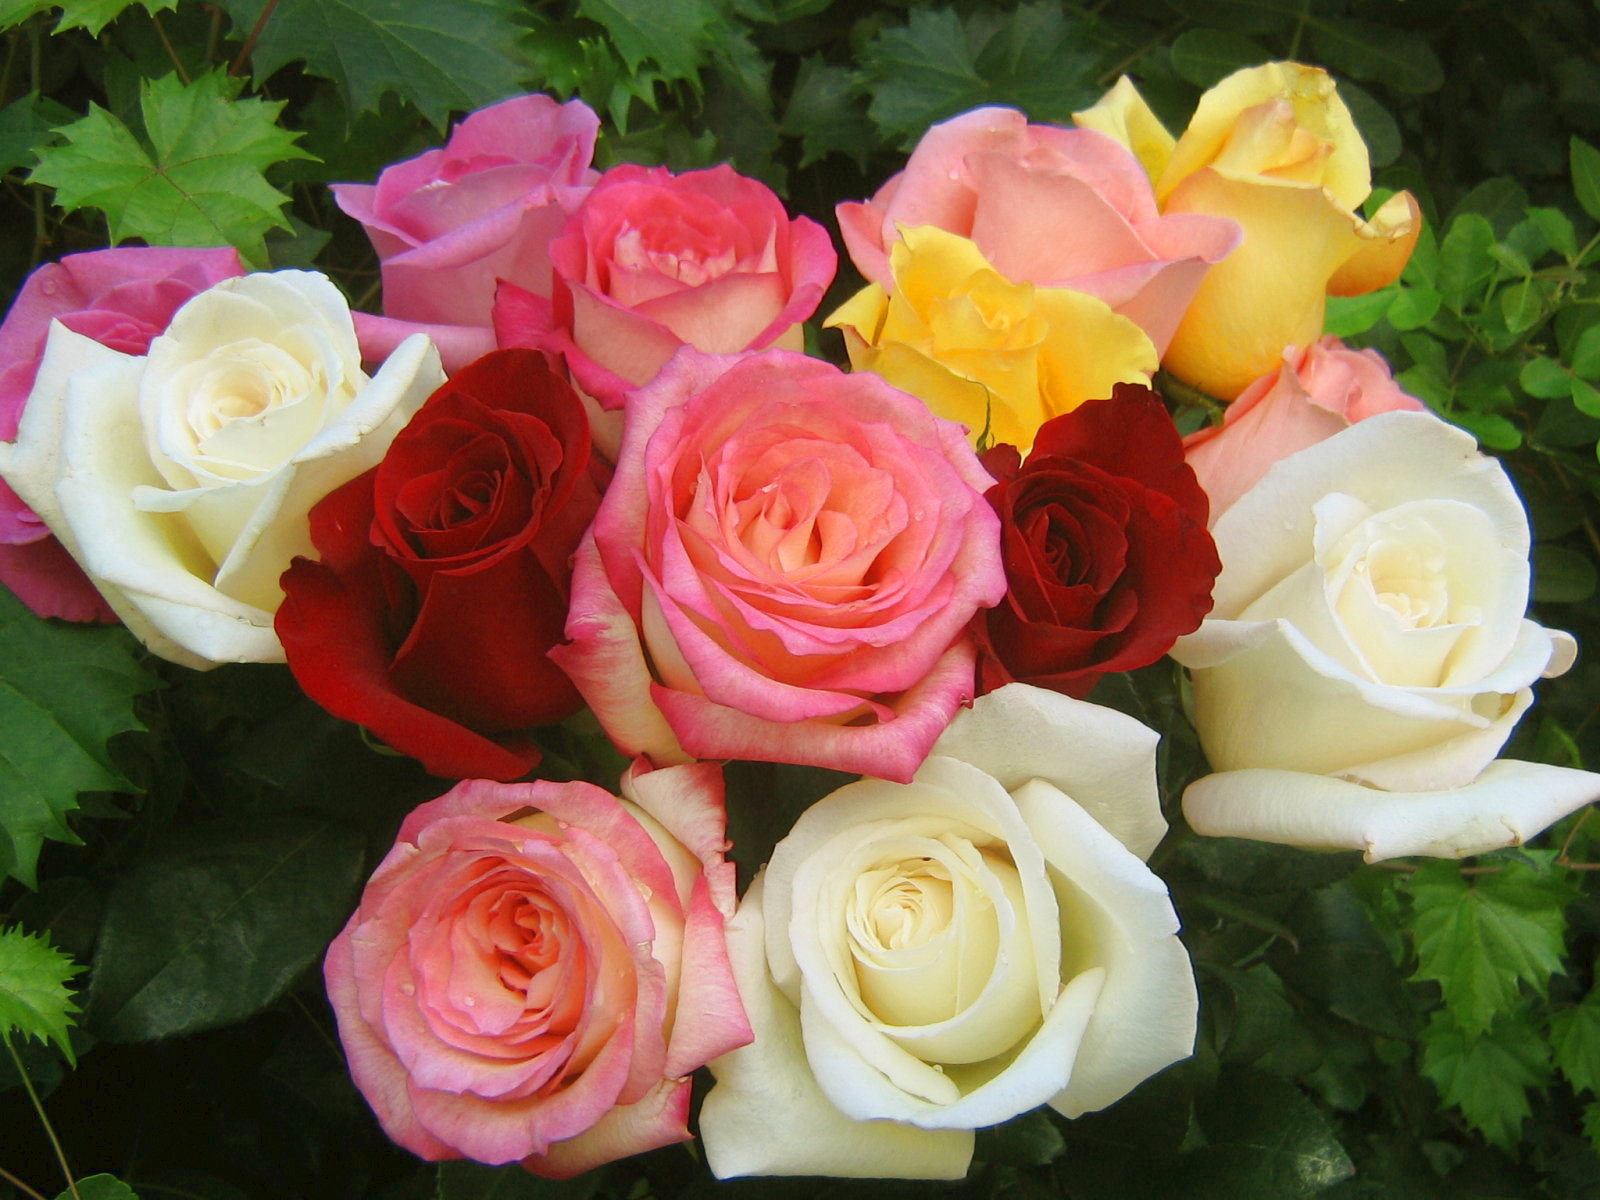 roses_bouquet_3567.jpg